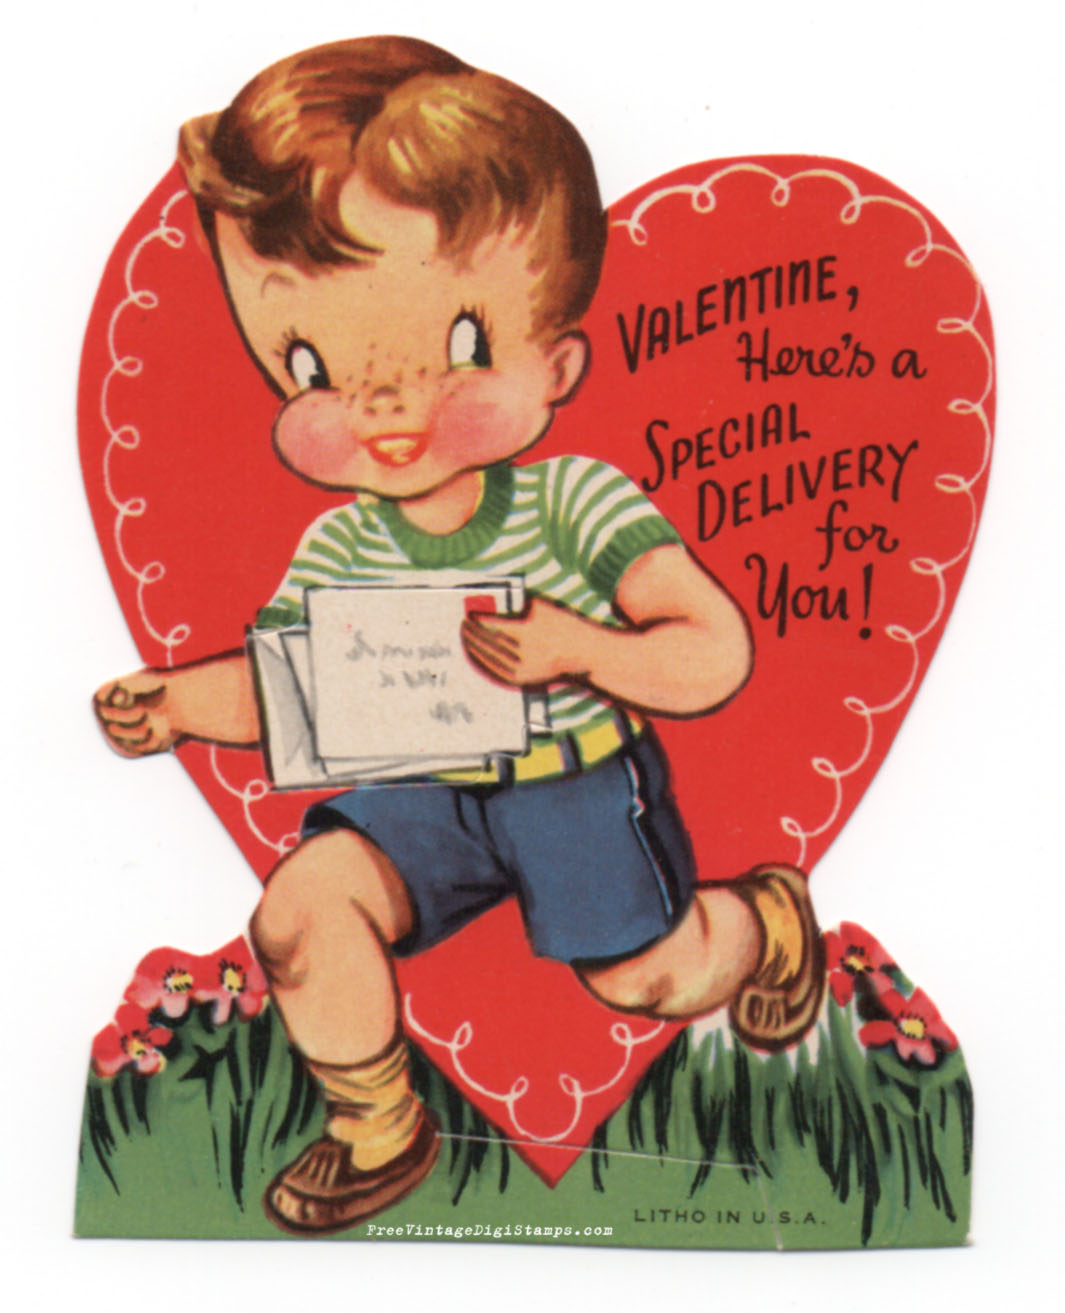 hazelruthes-s-fabulous-printables-free-vintage-valentines